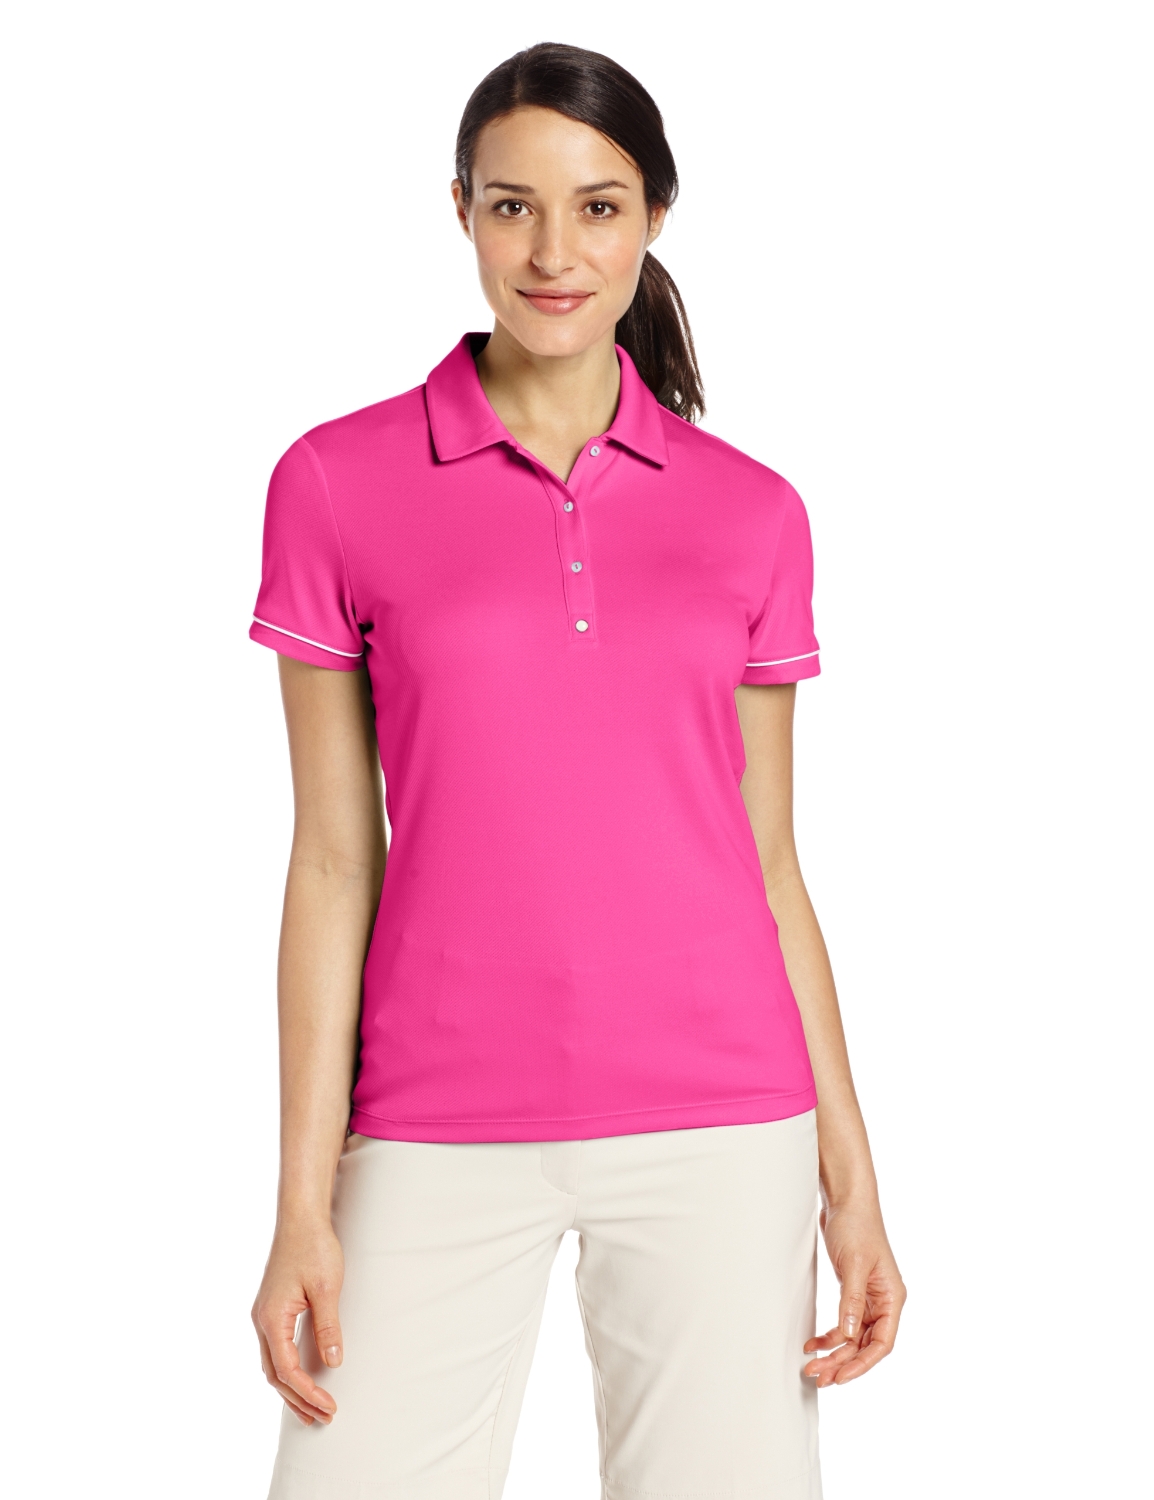 Puma Womens Golf Shirts